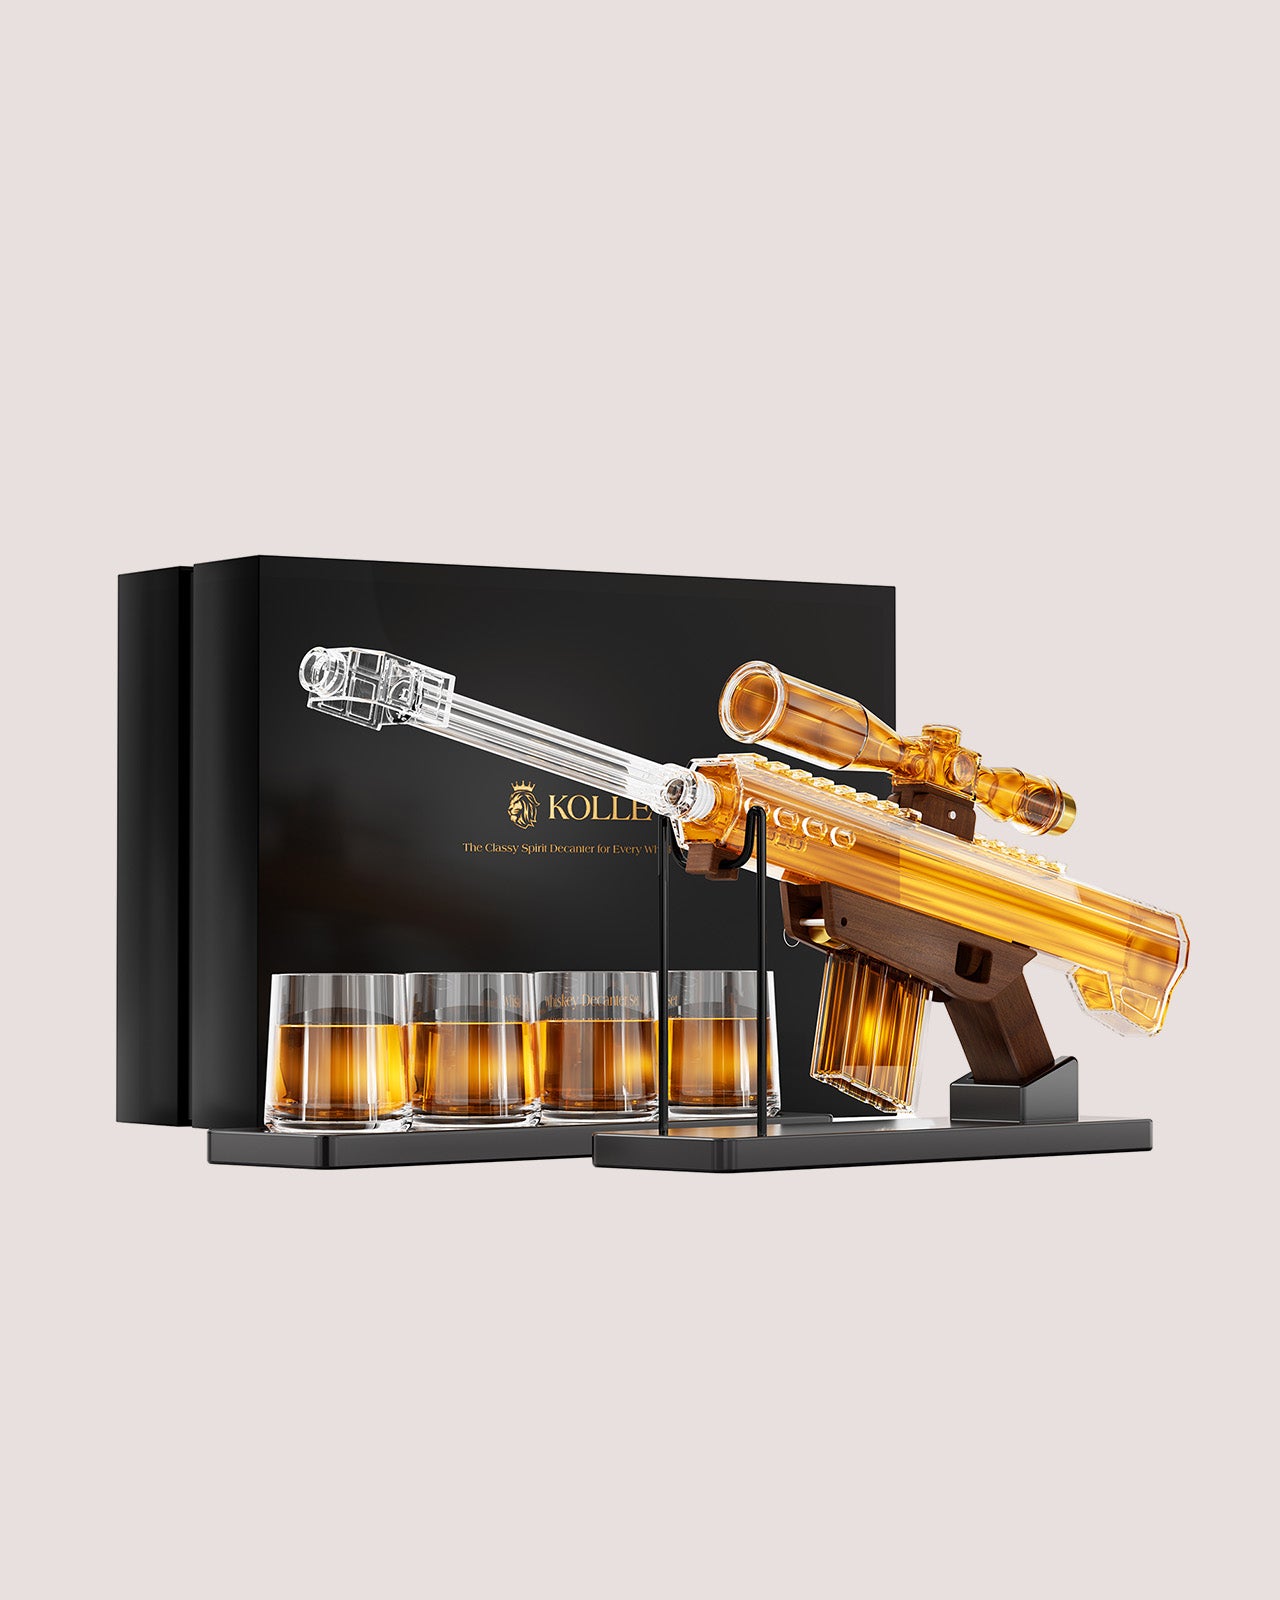 Kollea 22 Oz Barrett Gun Whiskey Decanter, Best Gift for Army Man - Kollea Whiskey Decanter